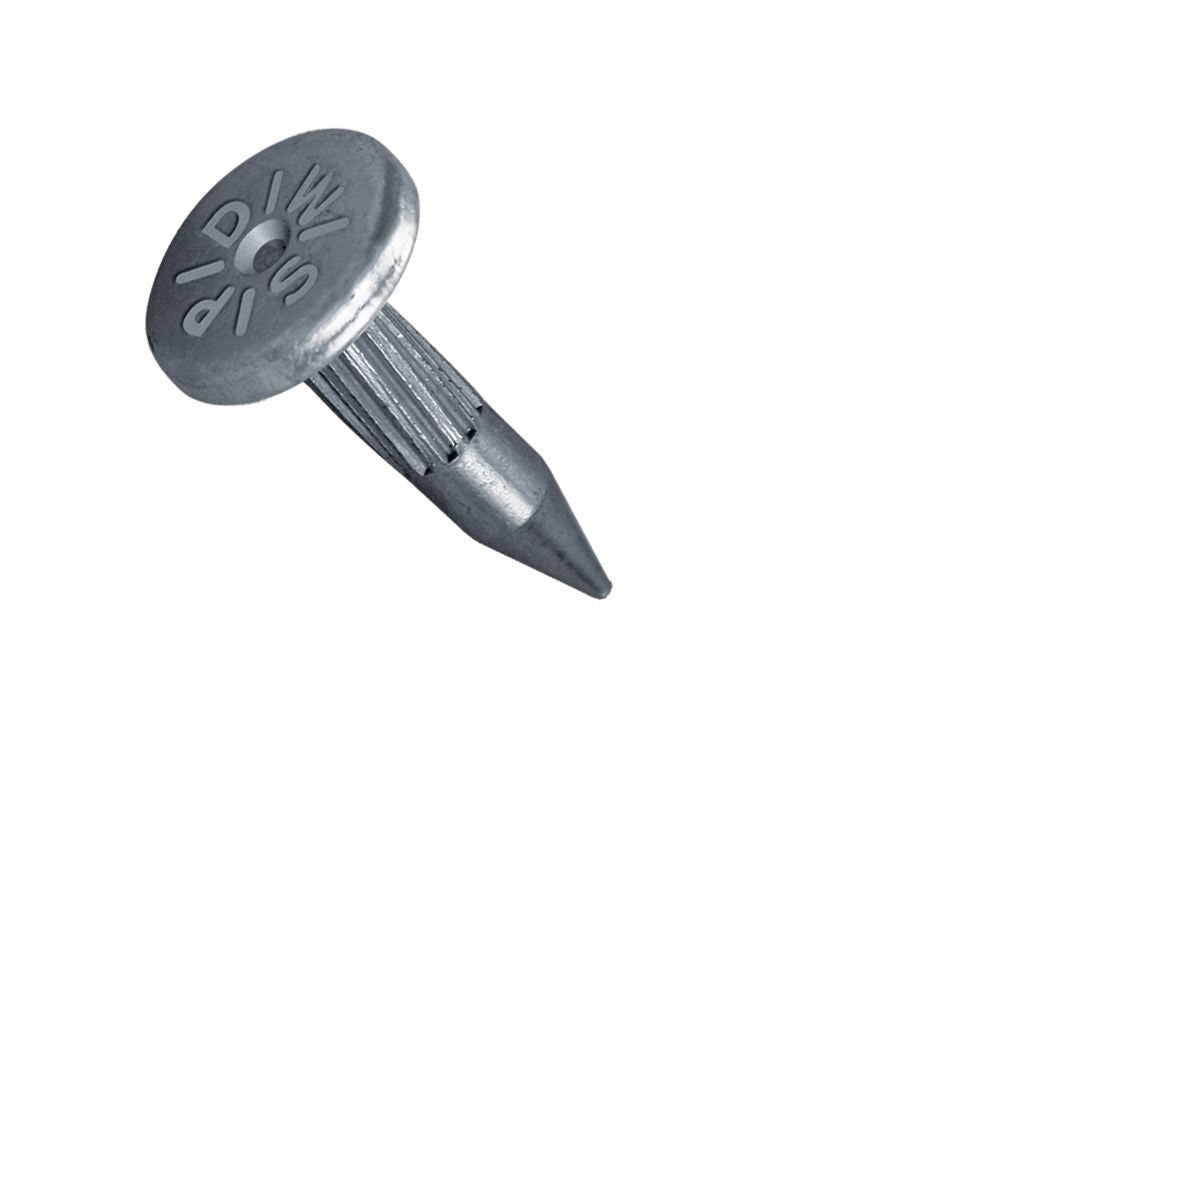 SitePro 20-751 Masonry Nail, 3/4-in (19.0mm)